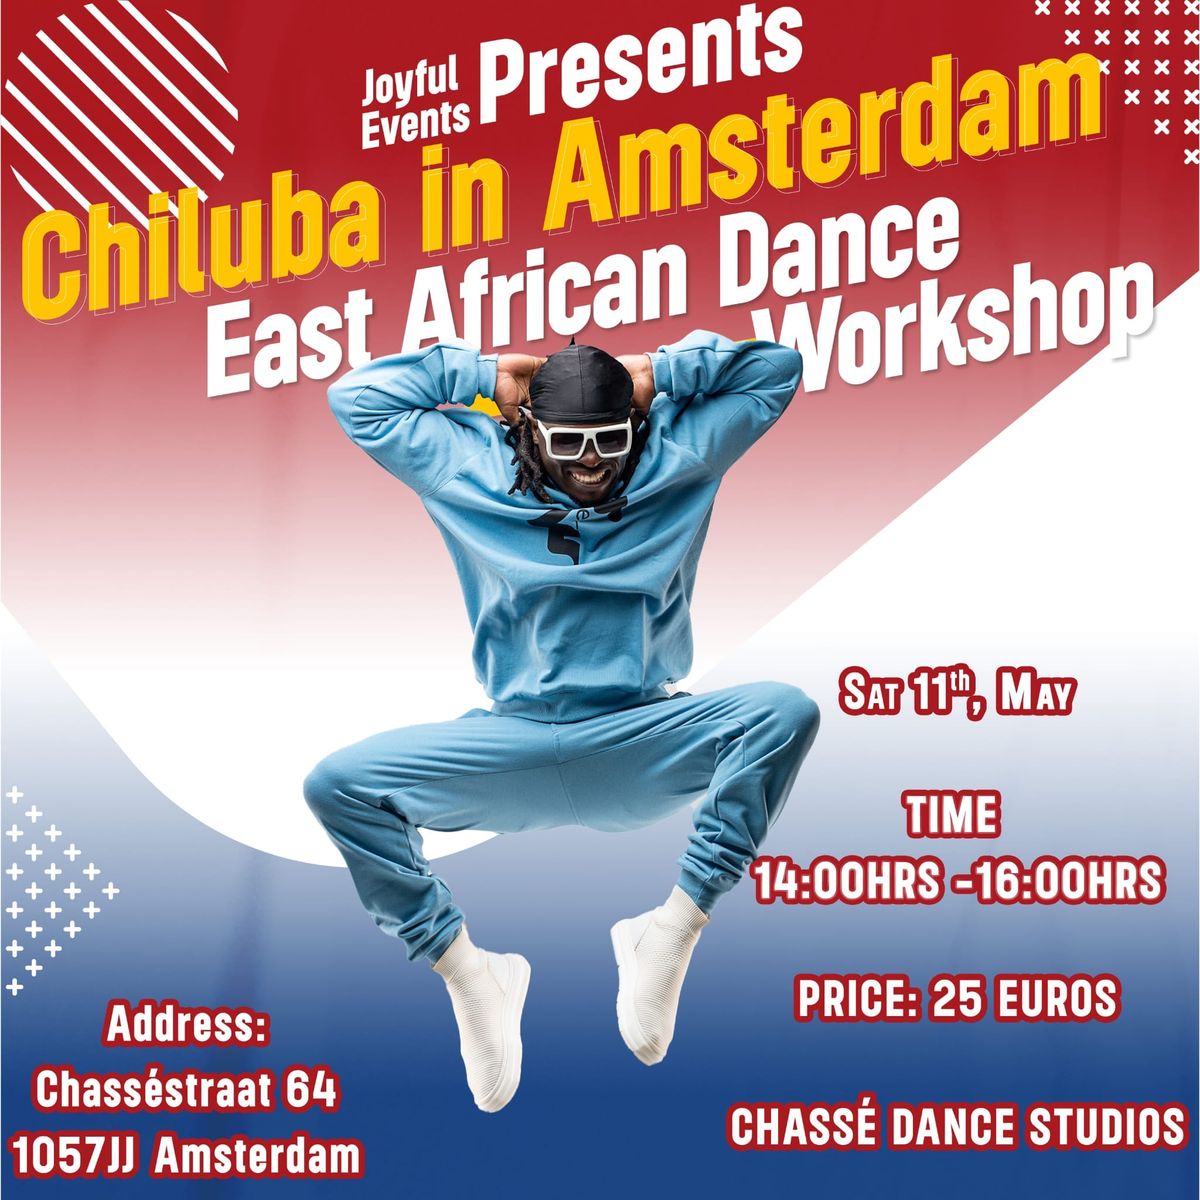 EAST AFRICAN DANCE WORKSHOP AMSTERDAM